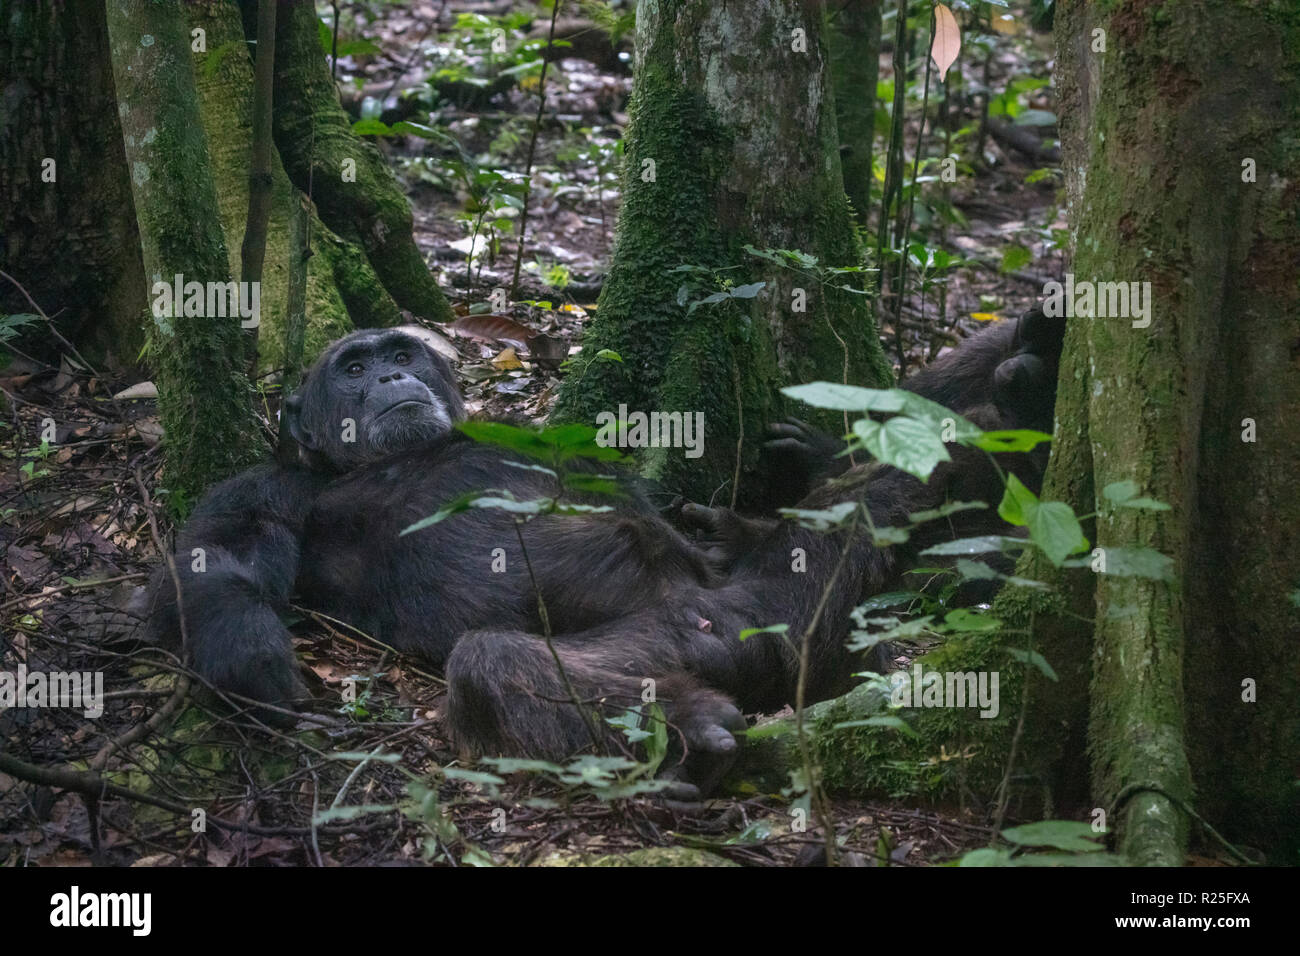 wild common chimpanzees or Pan troglodytes, Kibale National Park, Uganda Stock Photo